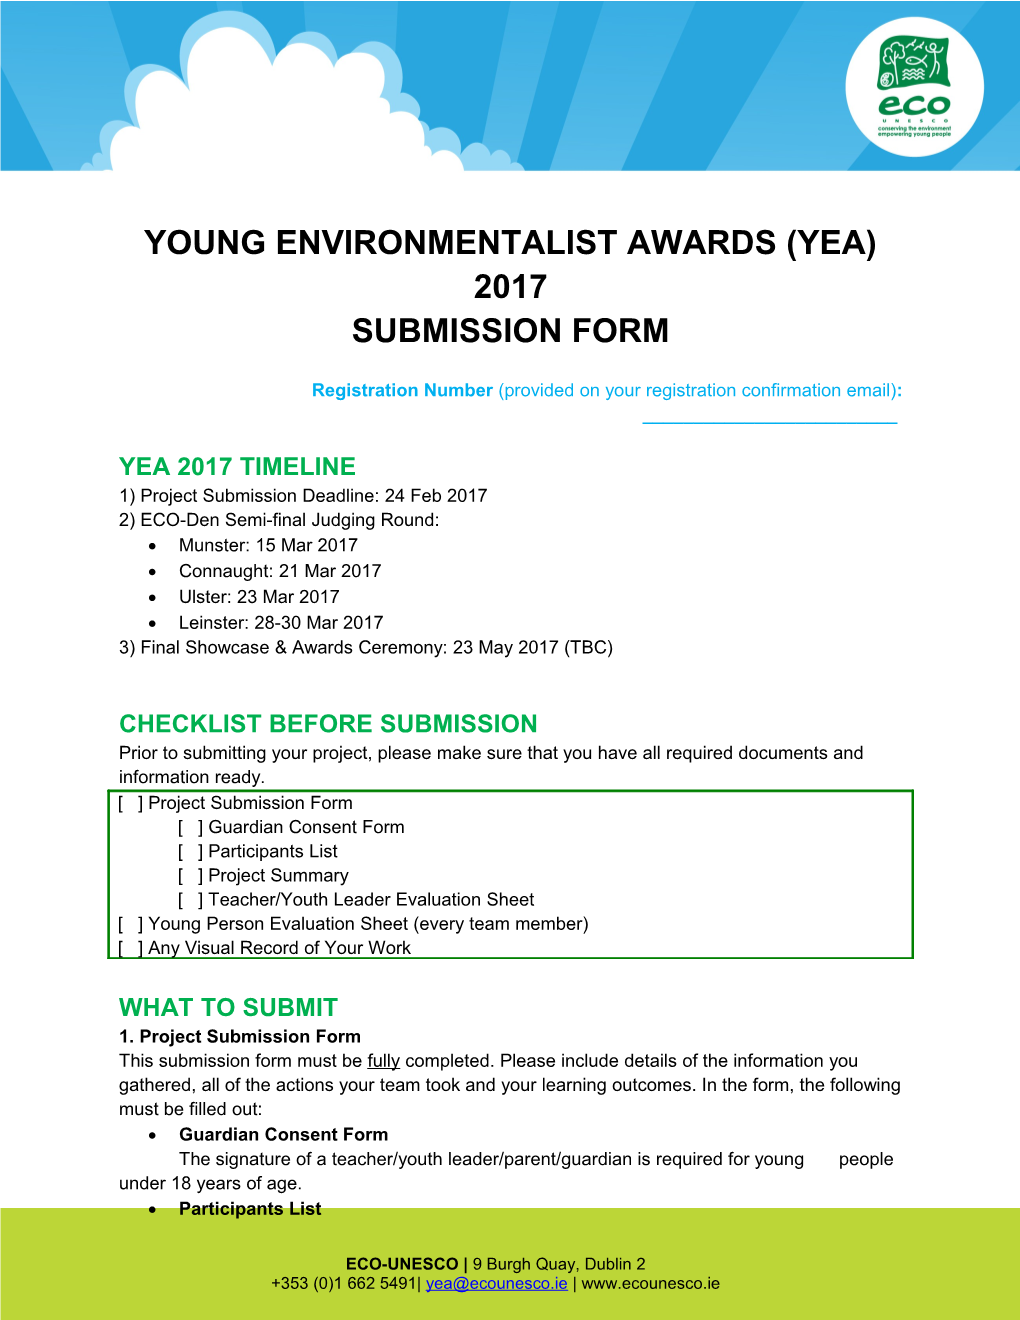 Young Environmentalist Awards 2017